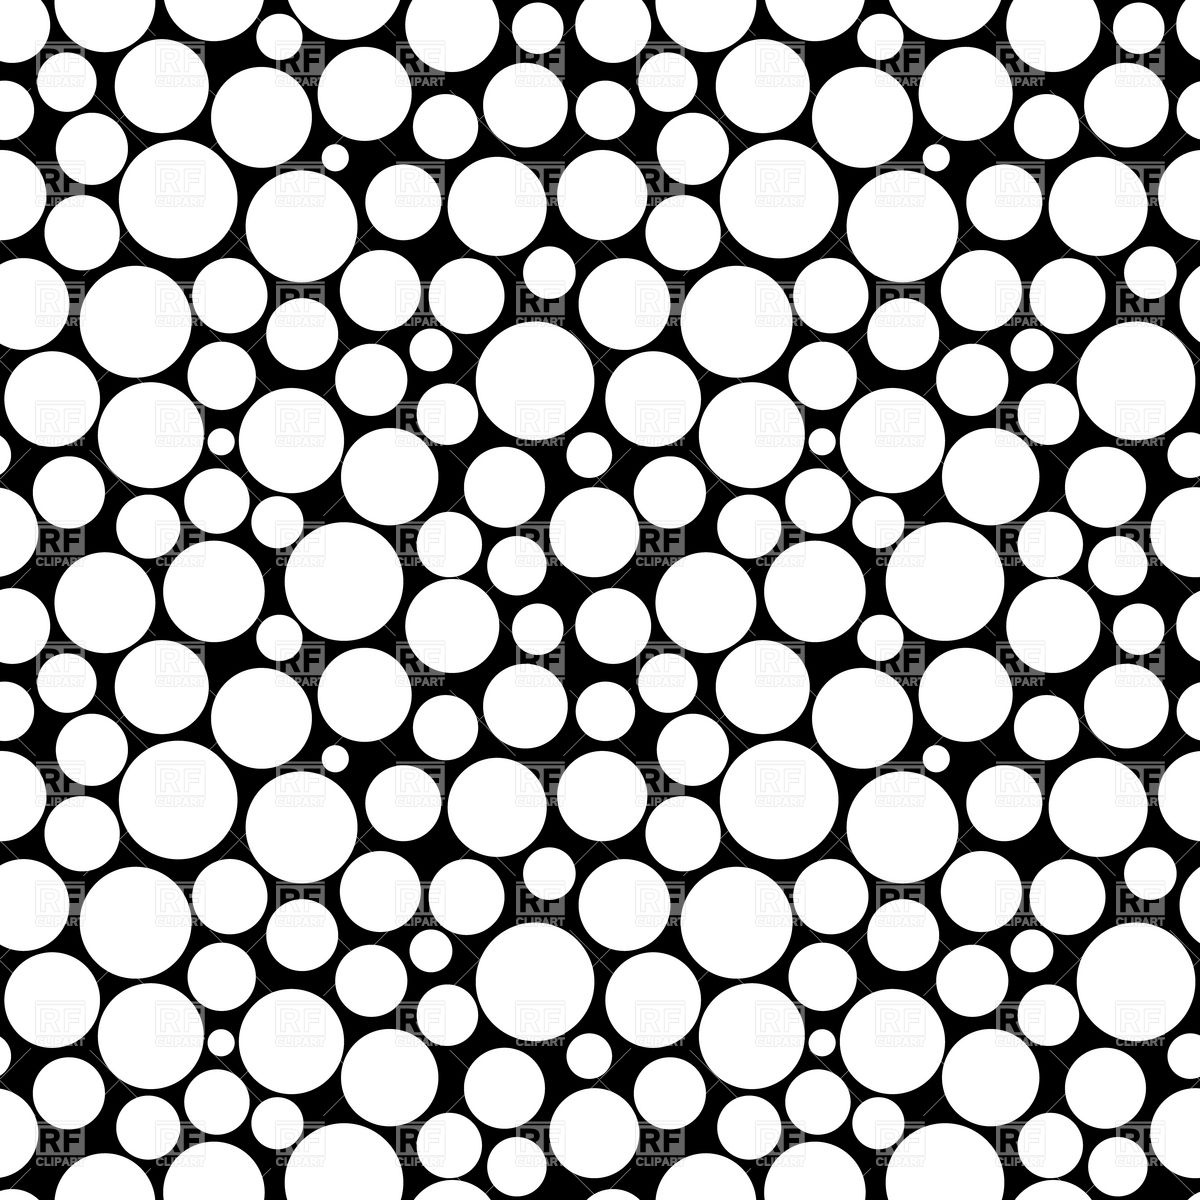 Black and white polka dot clip art free